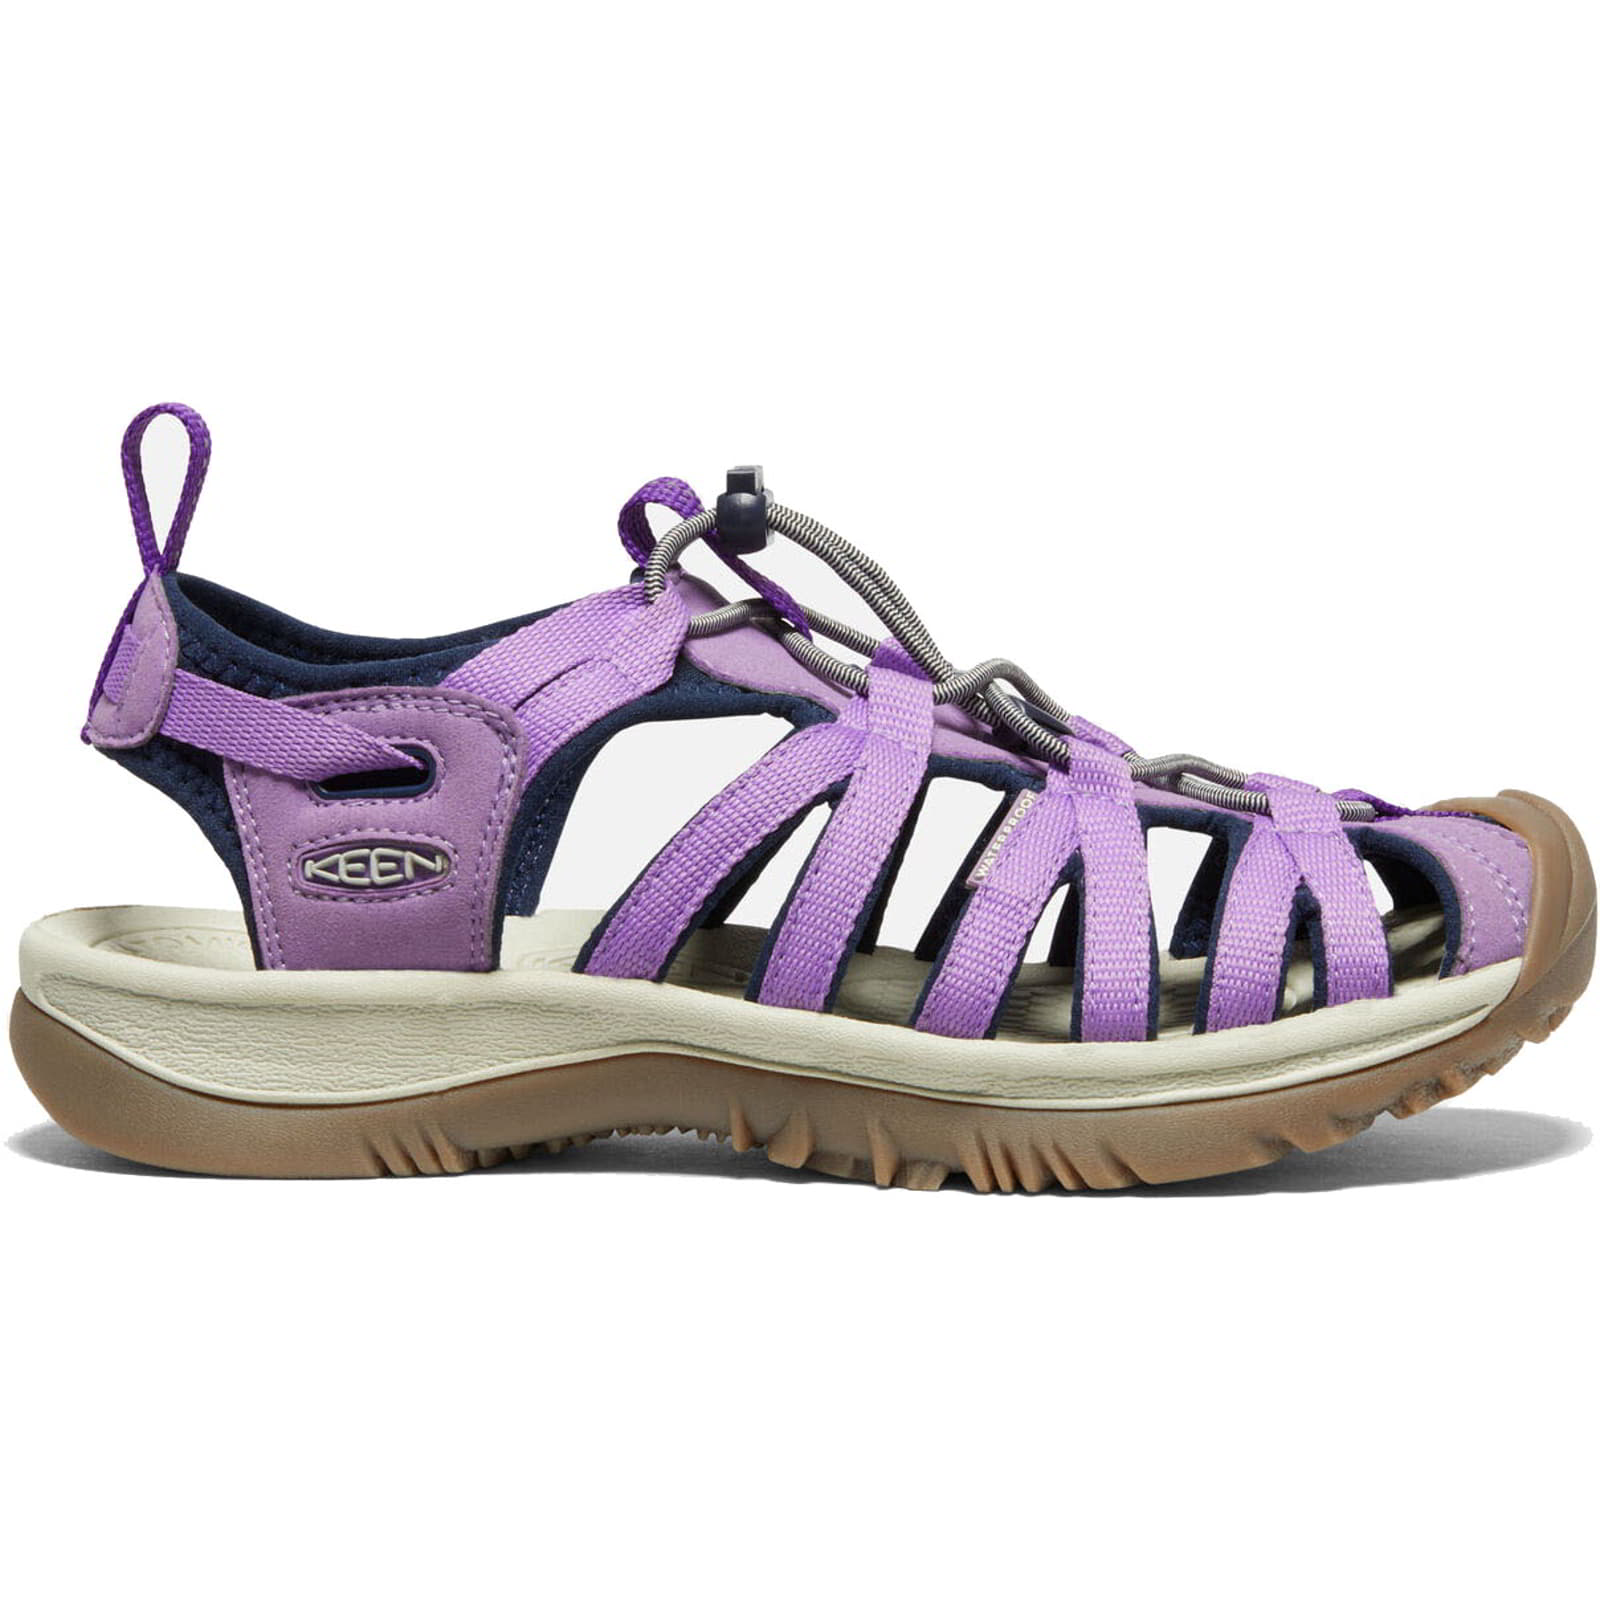 Keen Whisper Womens Walking Sandals - Chalk Violet English Lavender 2951